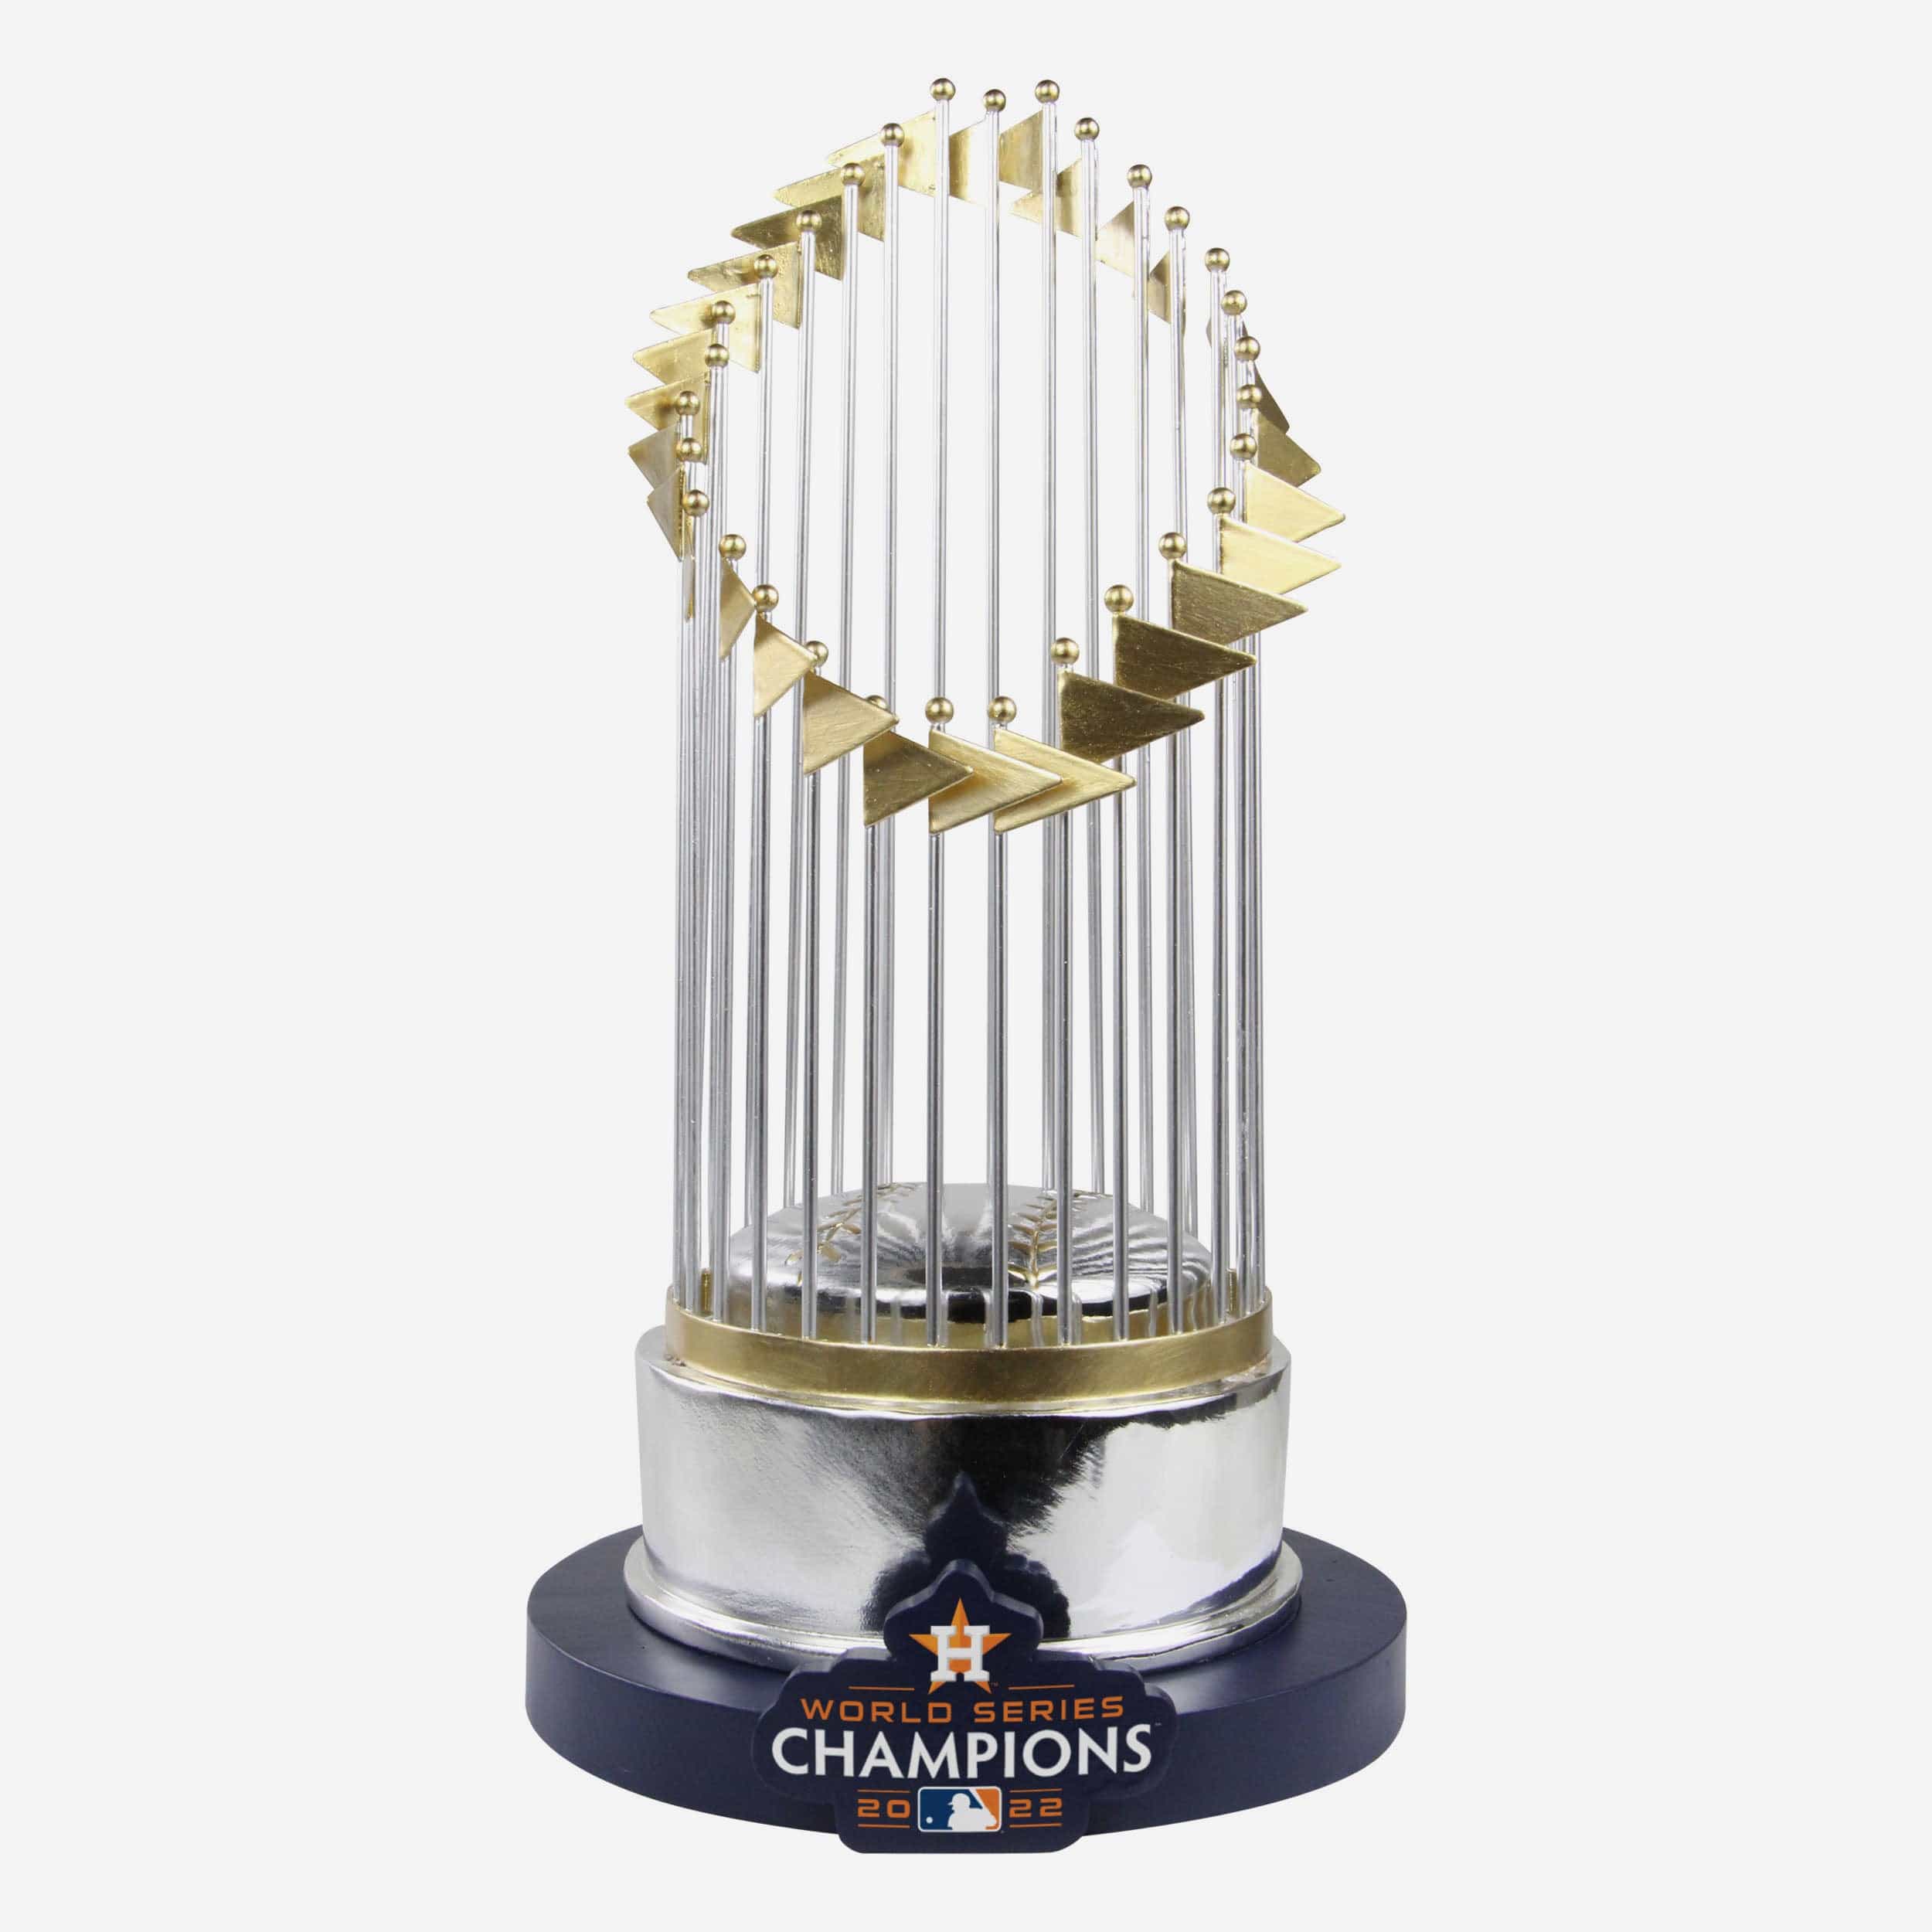  Houston Astros 2022 Baseball WorldSeries Champions